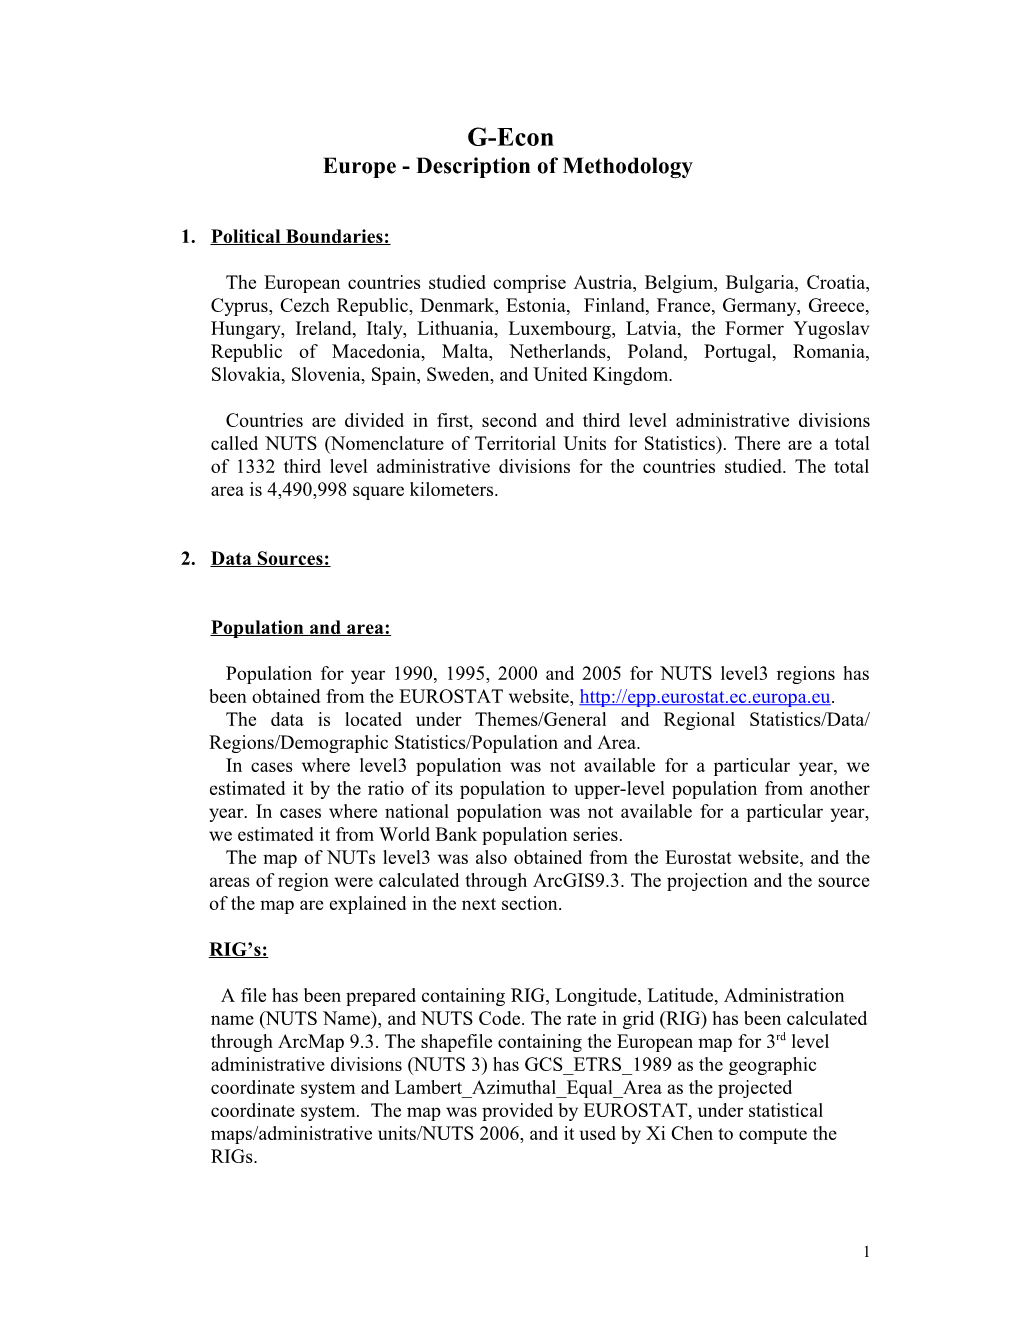 Europe - Description of Methodology